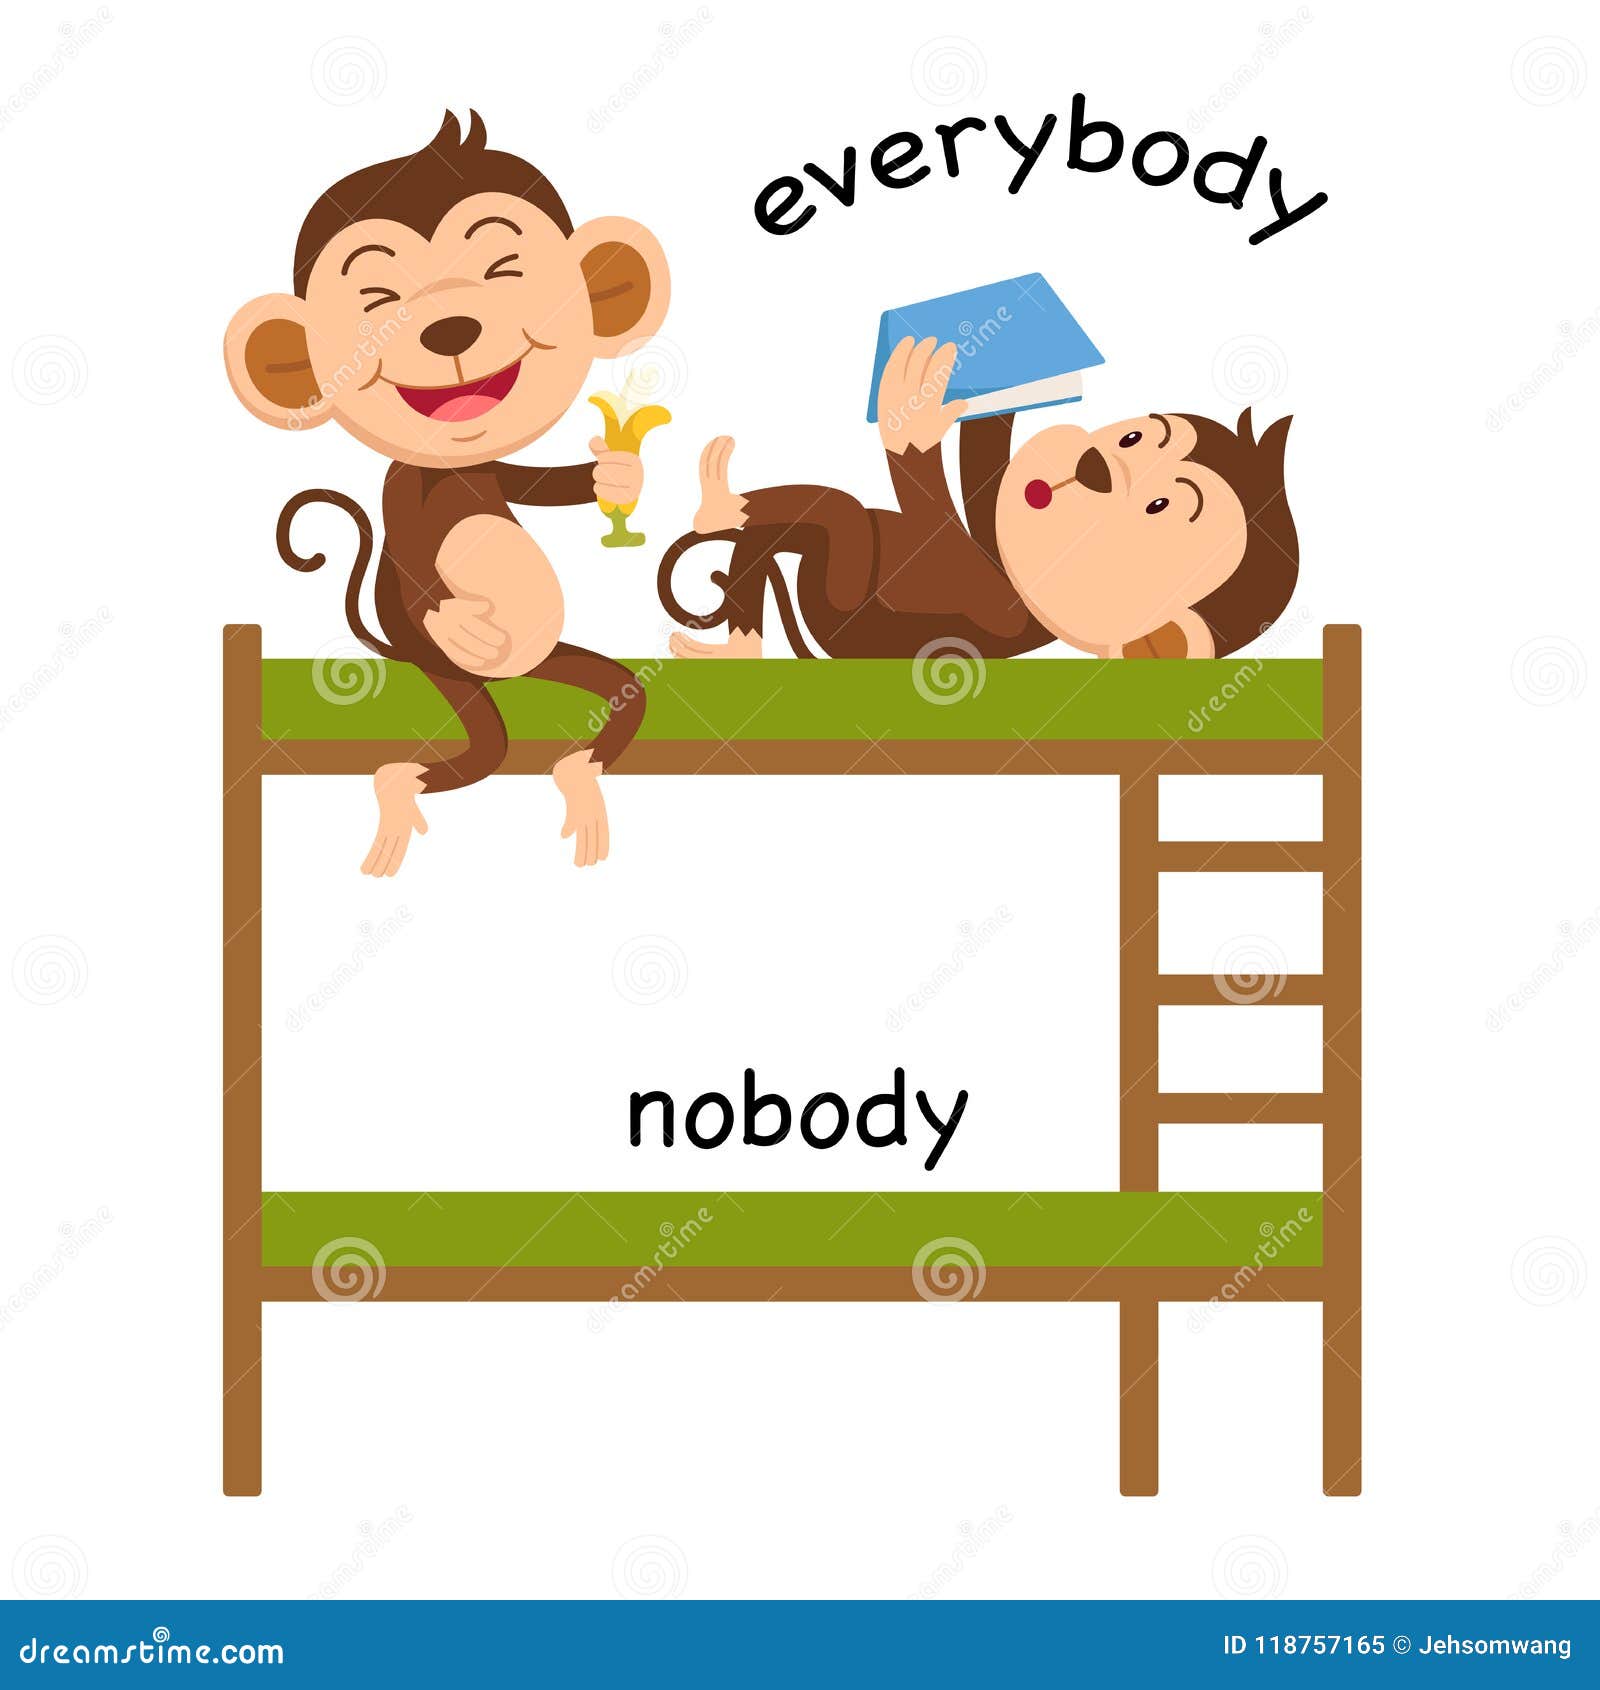 opposite everybody and nobody